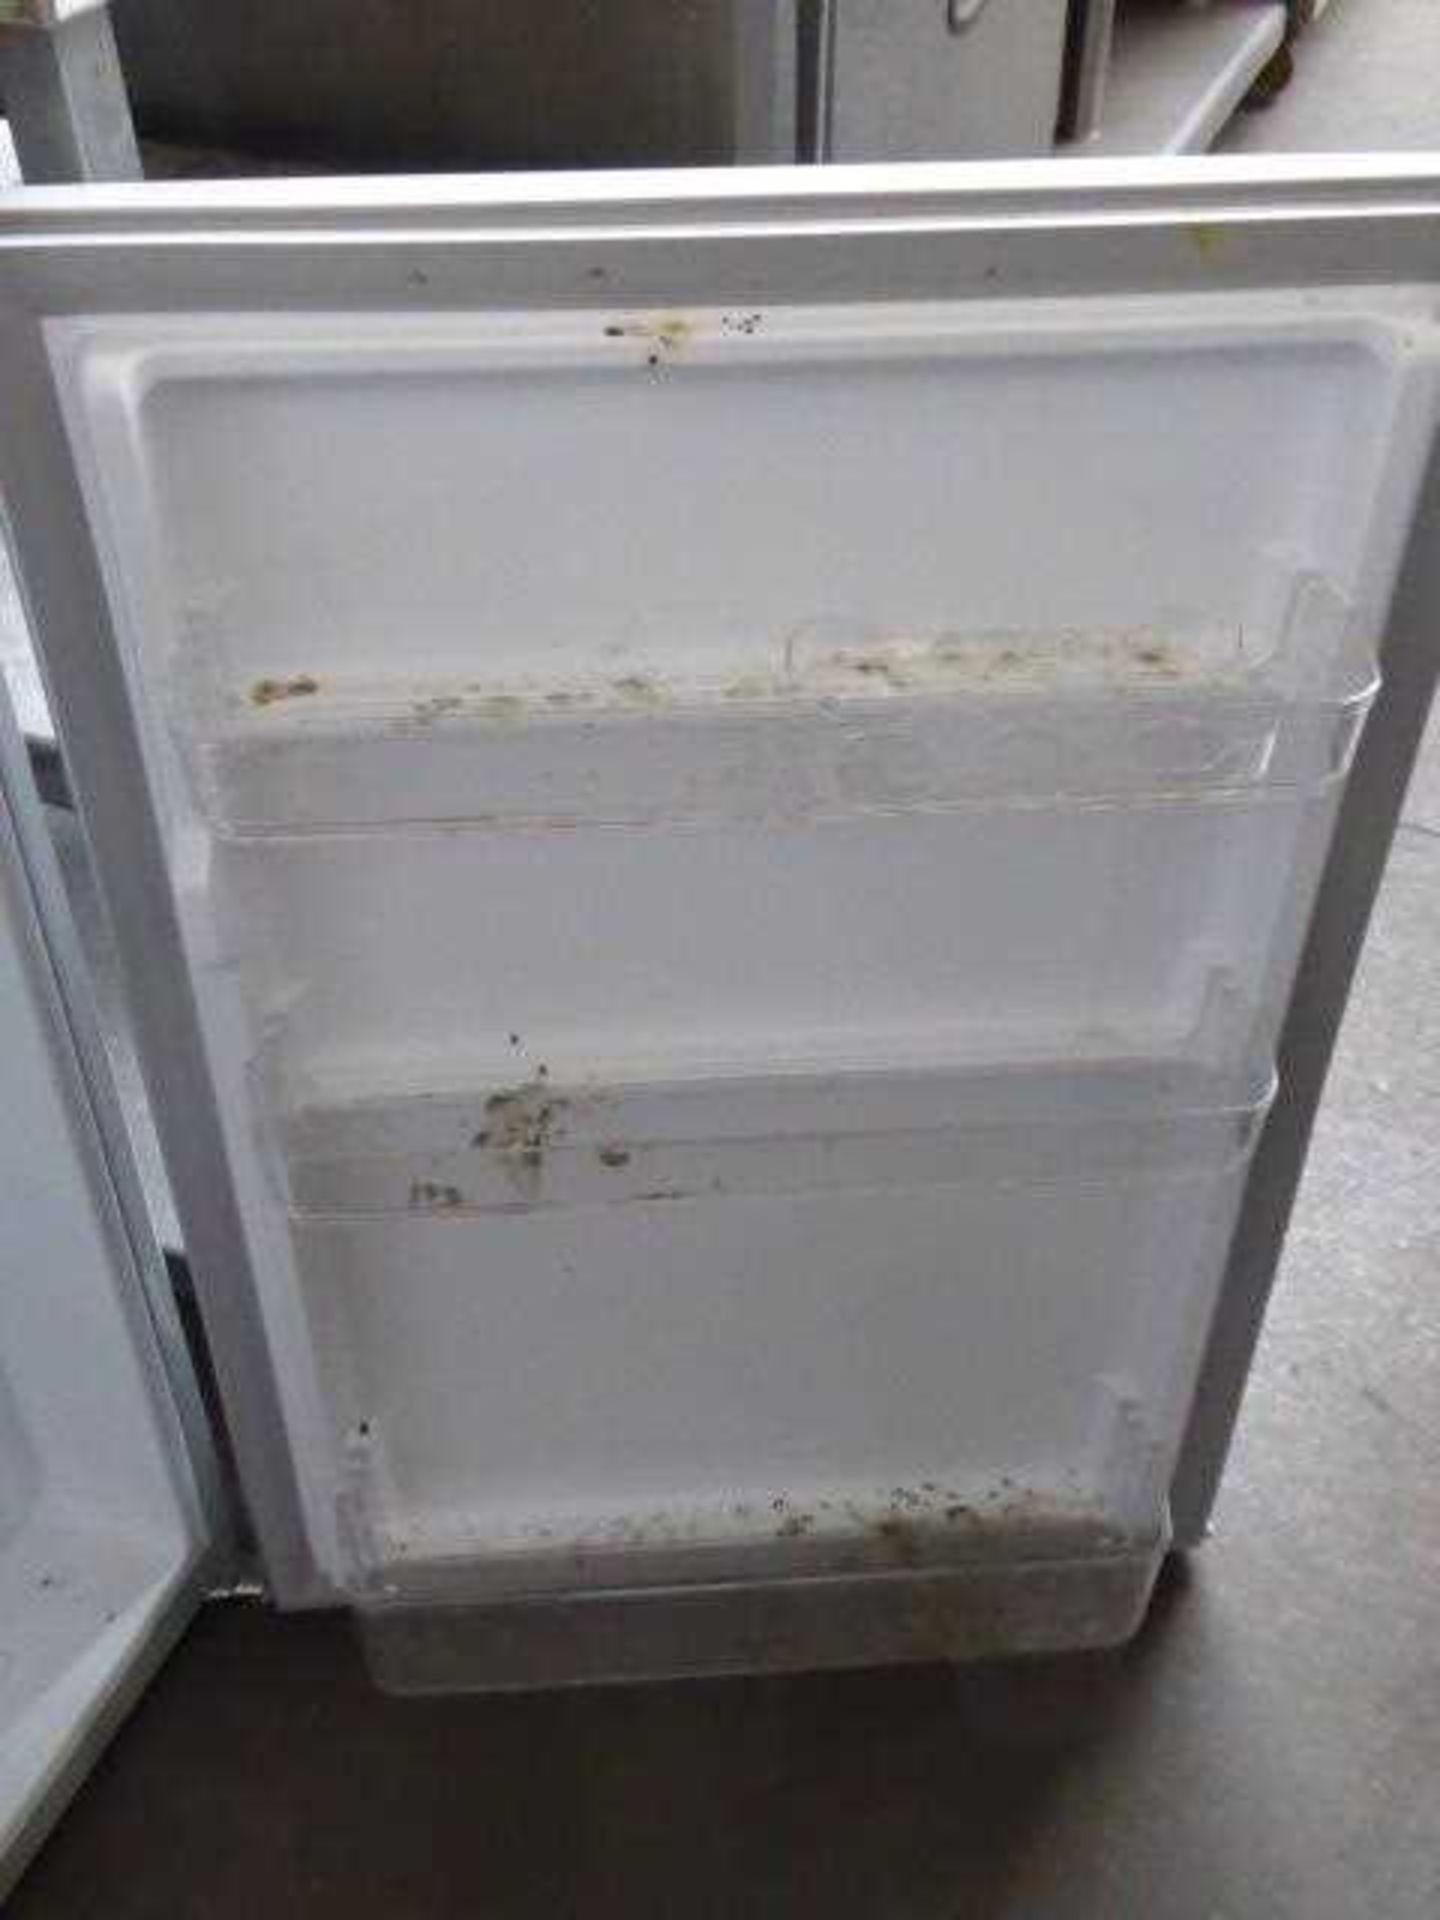 56cm domestic under counter fridge - Image 3 of 3